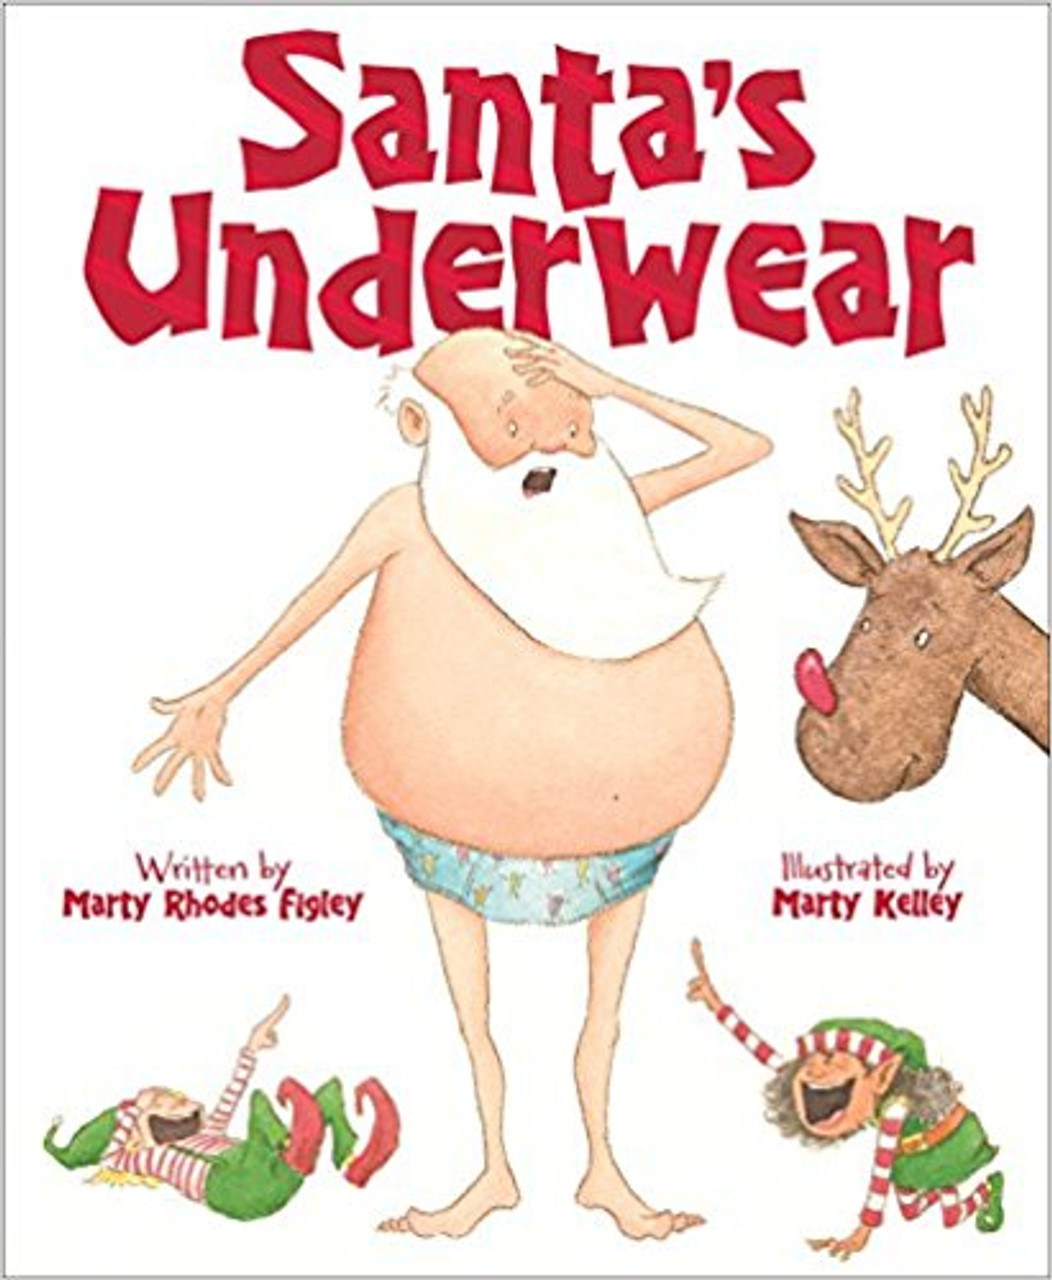 Santa's Underwear (Hard Cover) by Marty Rhodes Figley